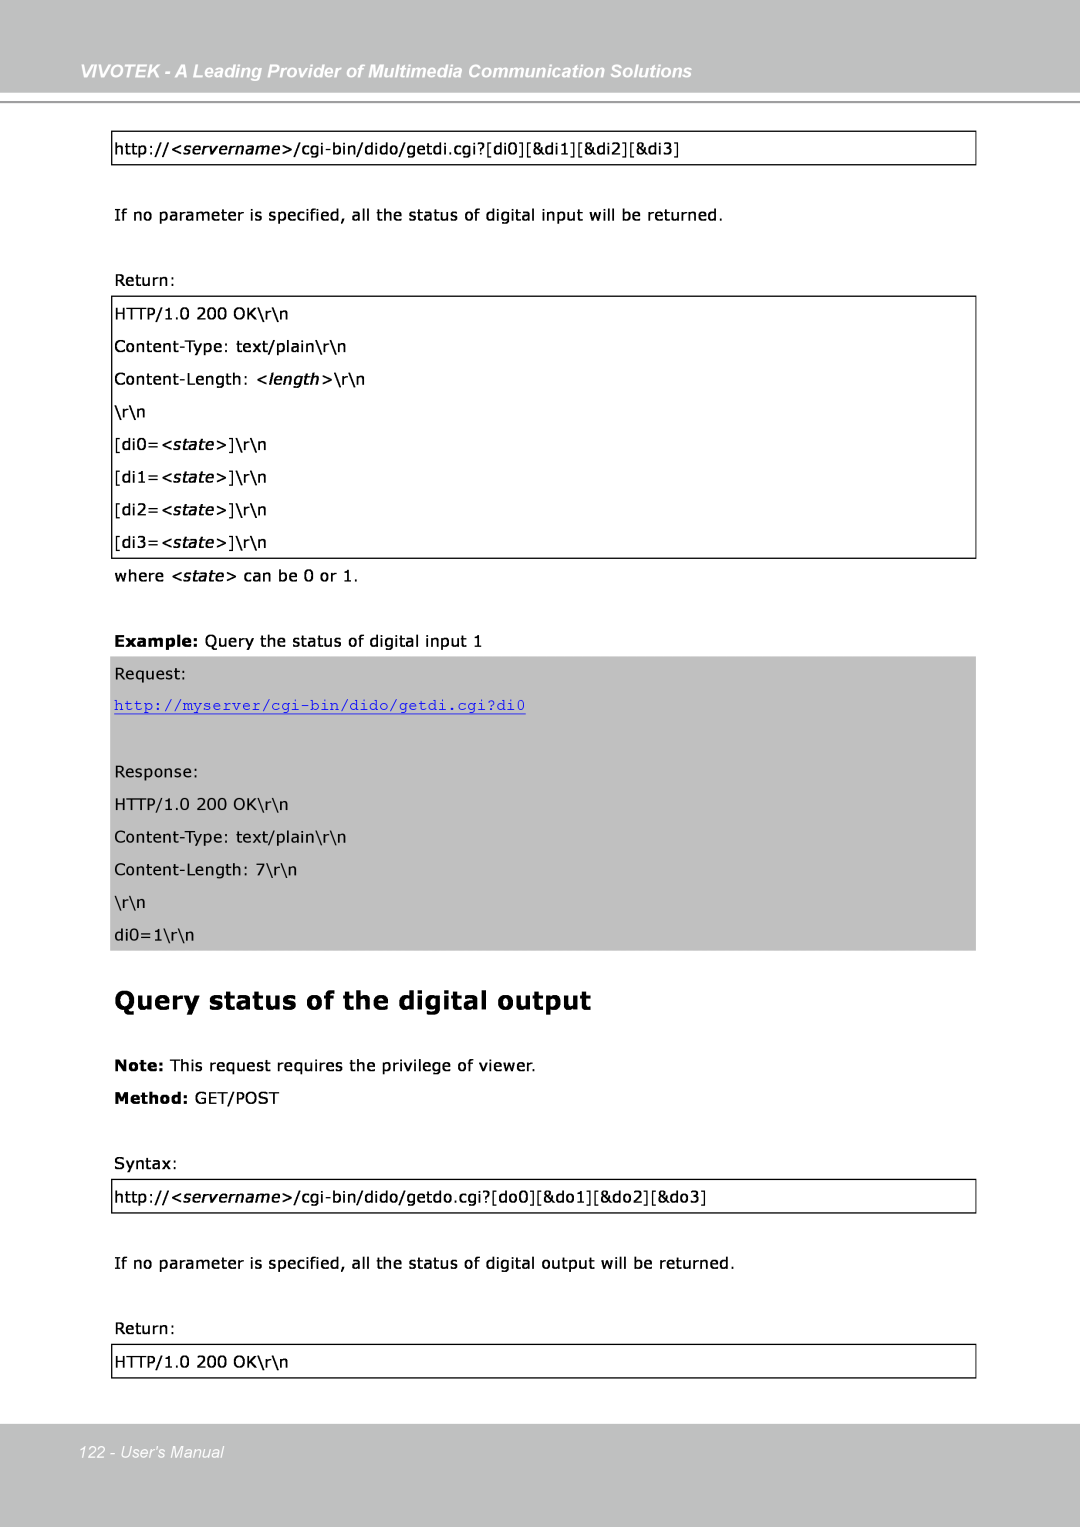 Vivotek FD7141(V) manual Query status of the digital output, Method: GET/POST, Users Manual 